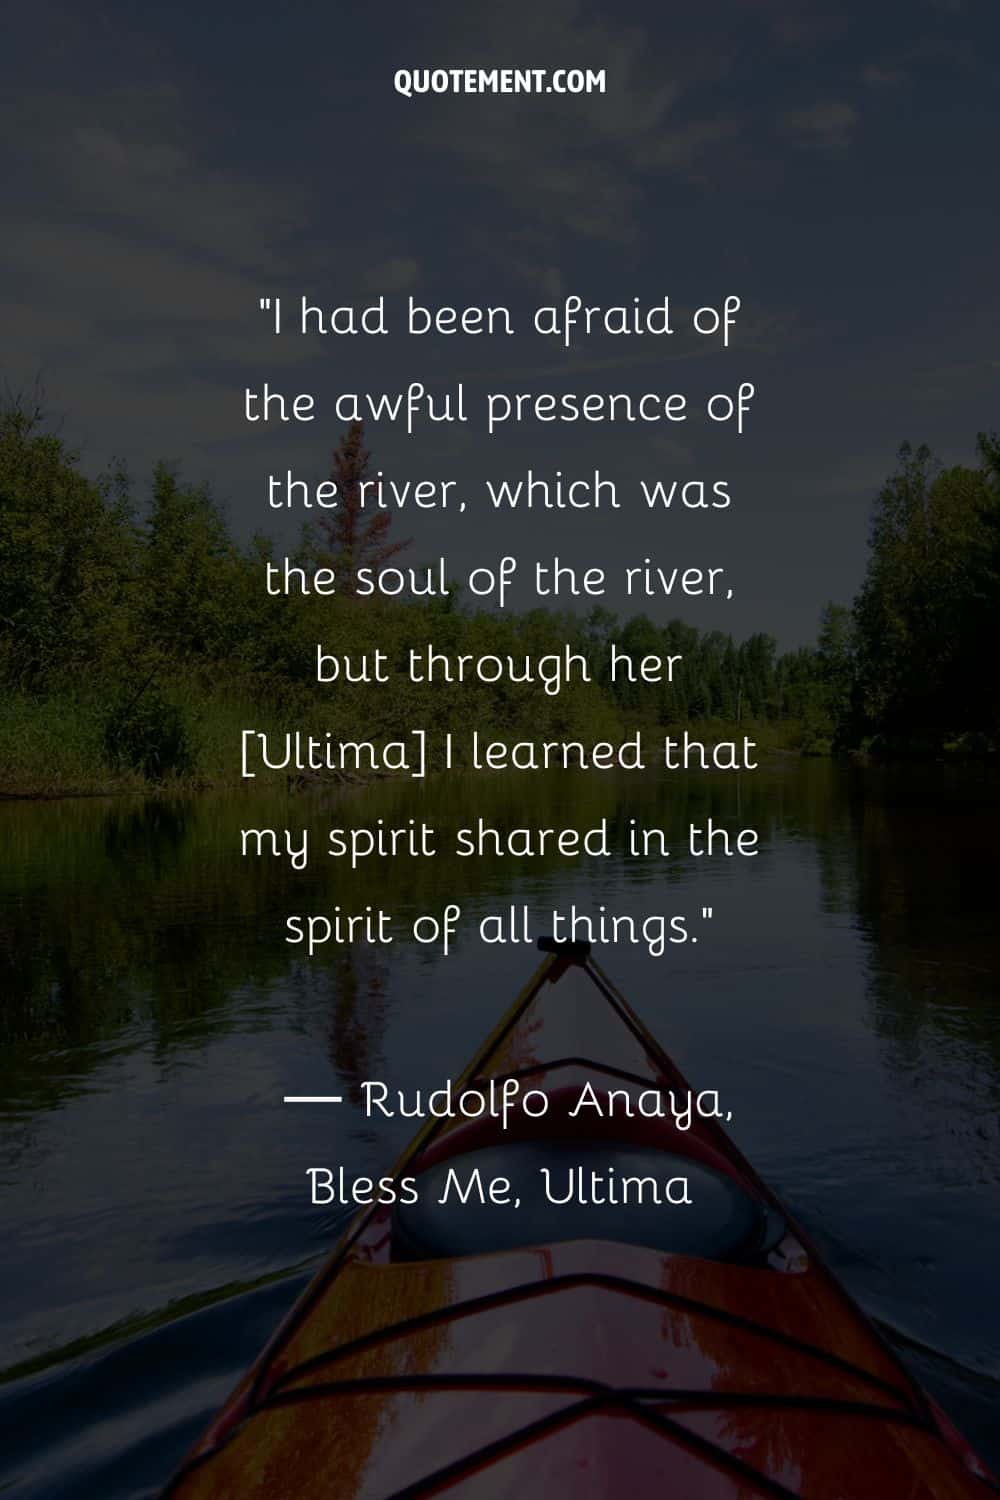 Solo canoe adventure on a serene river representing inspirational river quote